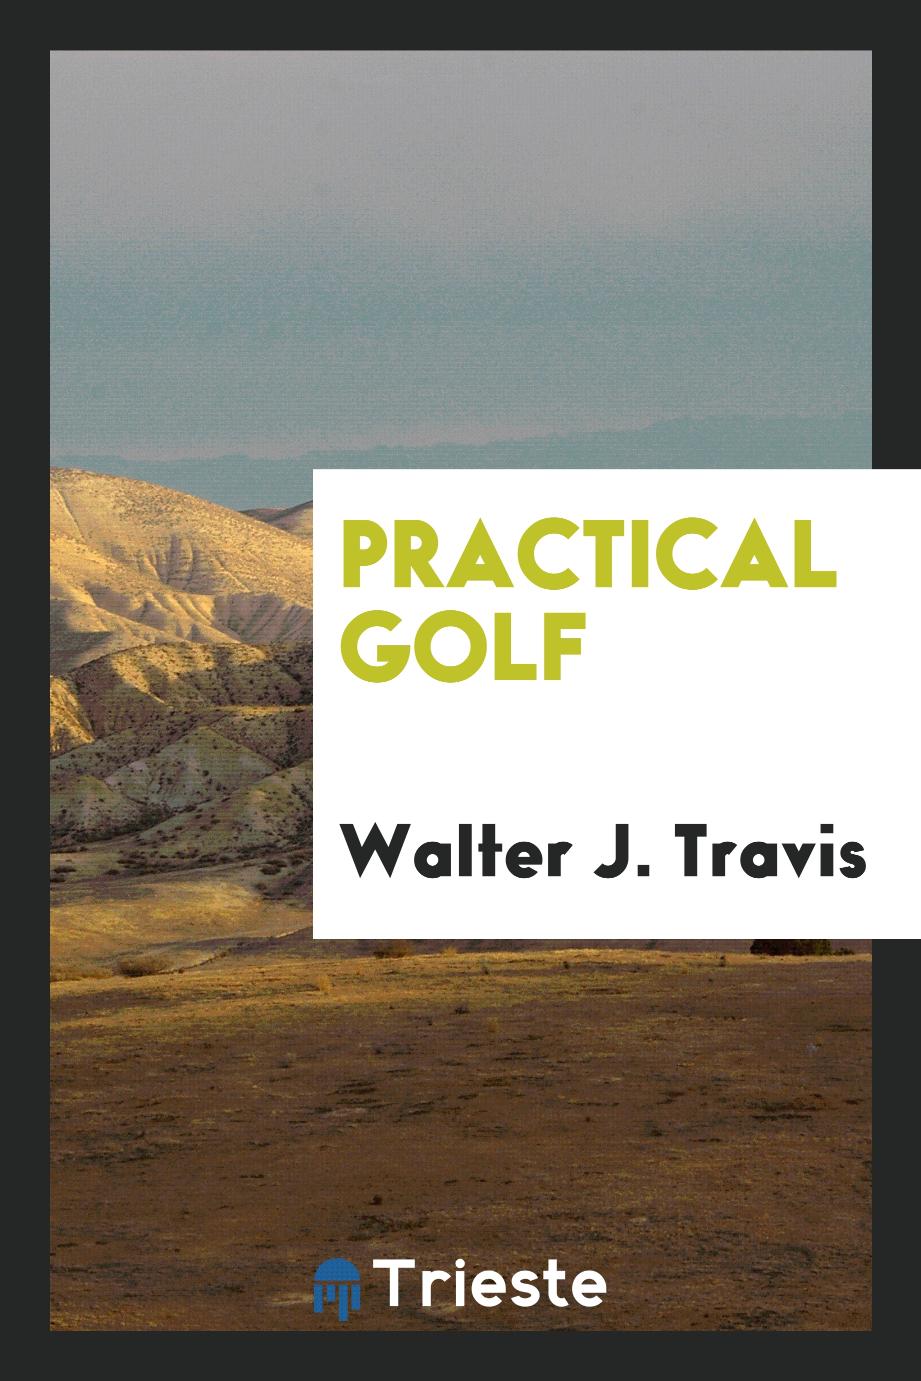 Walter J. Travis - Practical golf